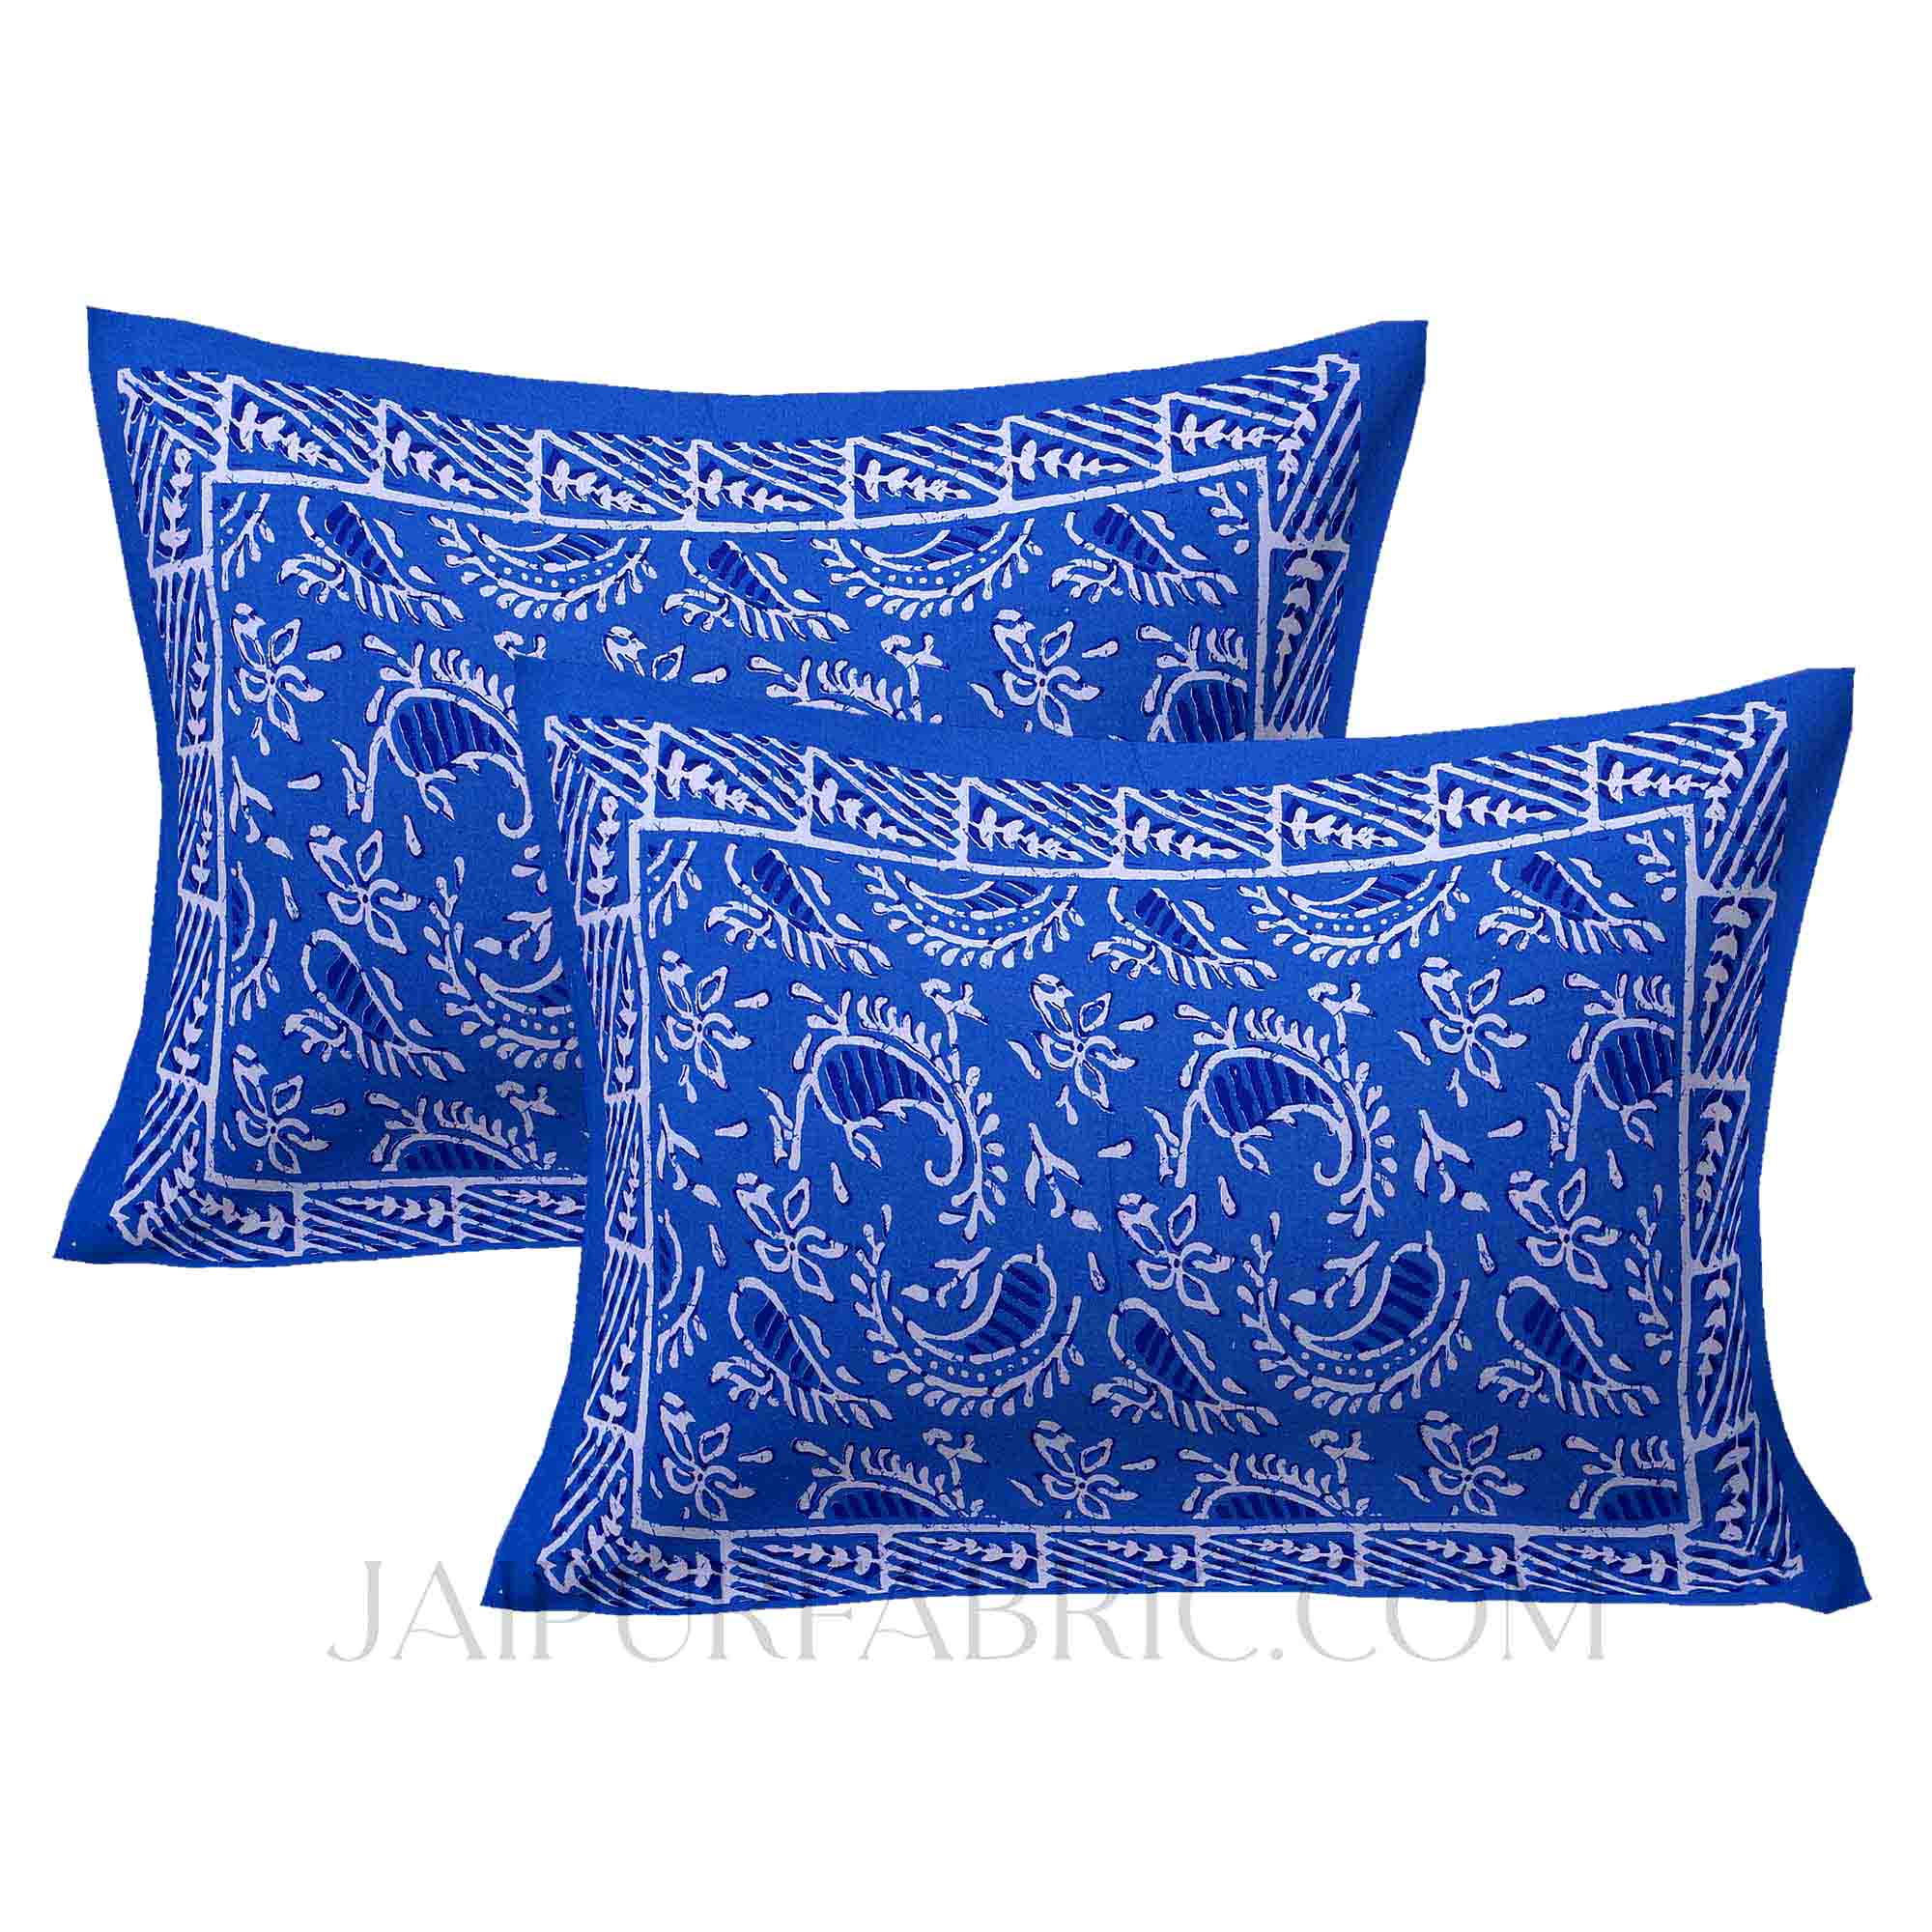 Blue Artistic Paisley Double Bedsheet